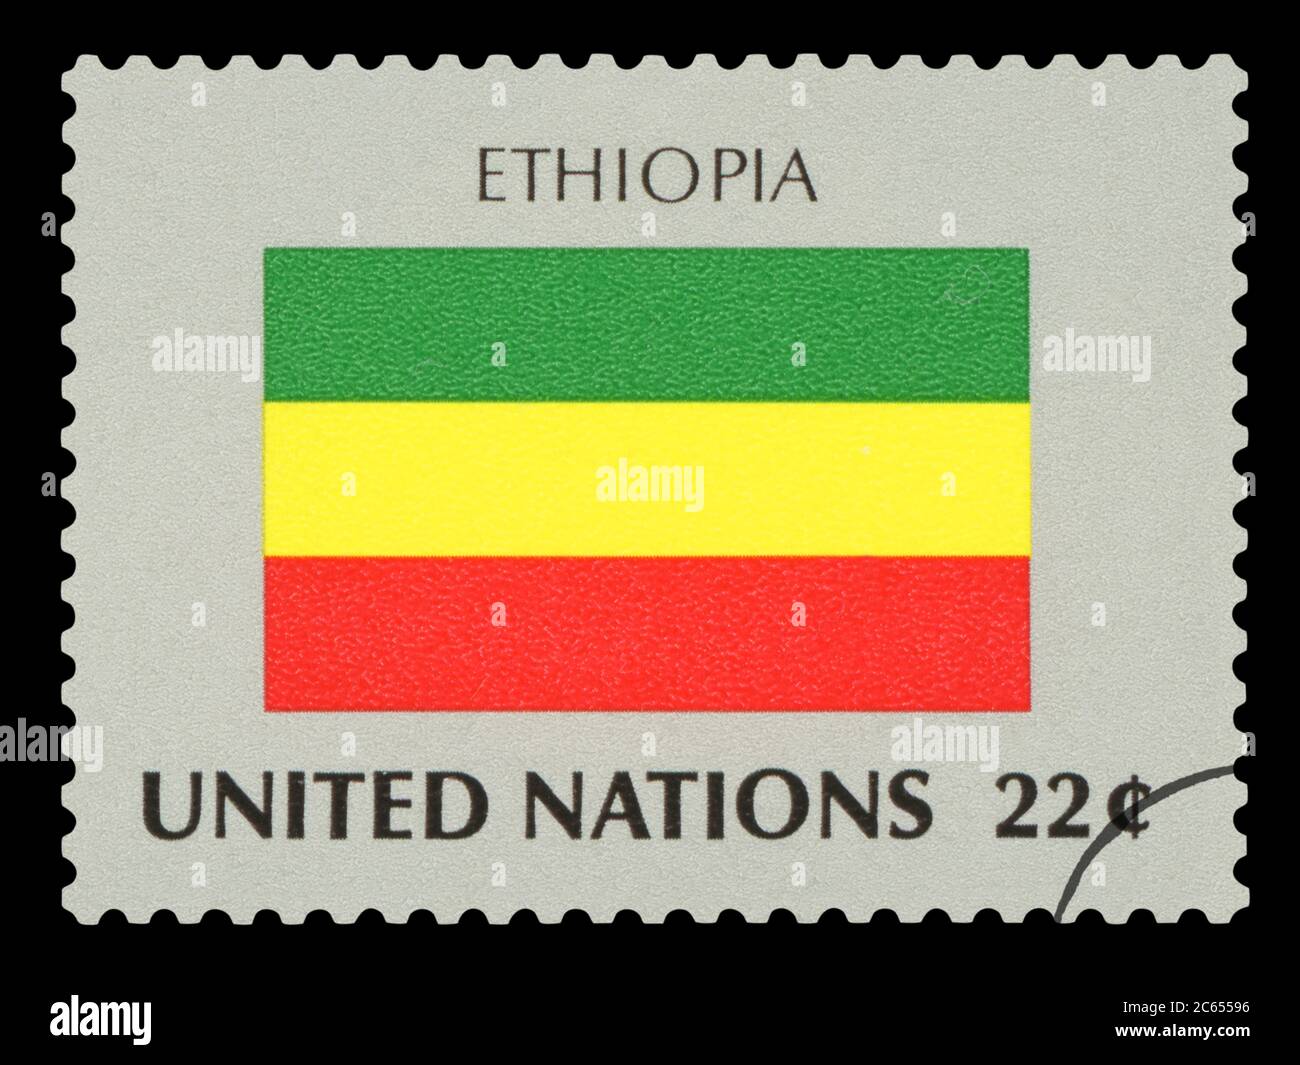 ETHIOPIA - Postage Stamp of Ethiopia national flag, Series of United Nations, circa 1984. Stock Photo